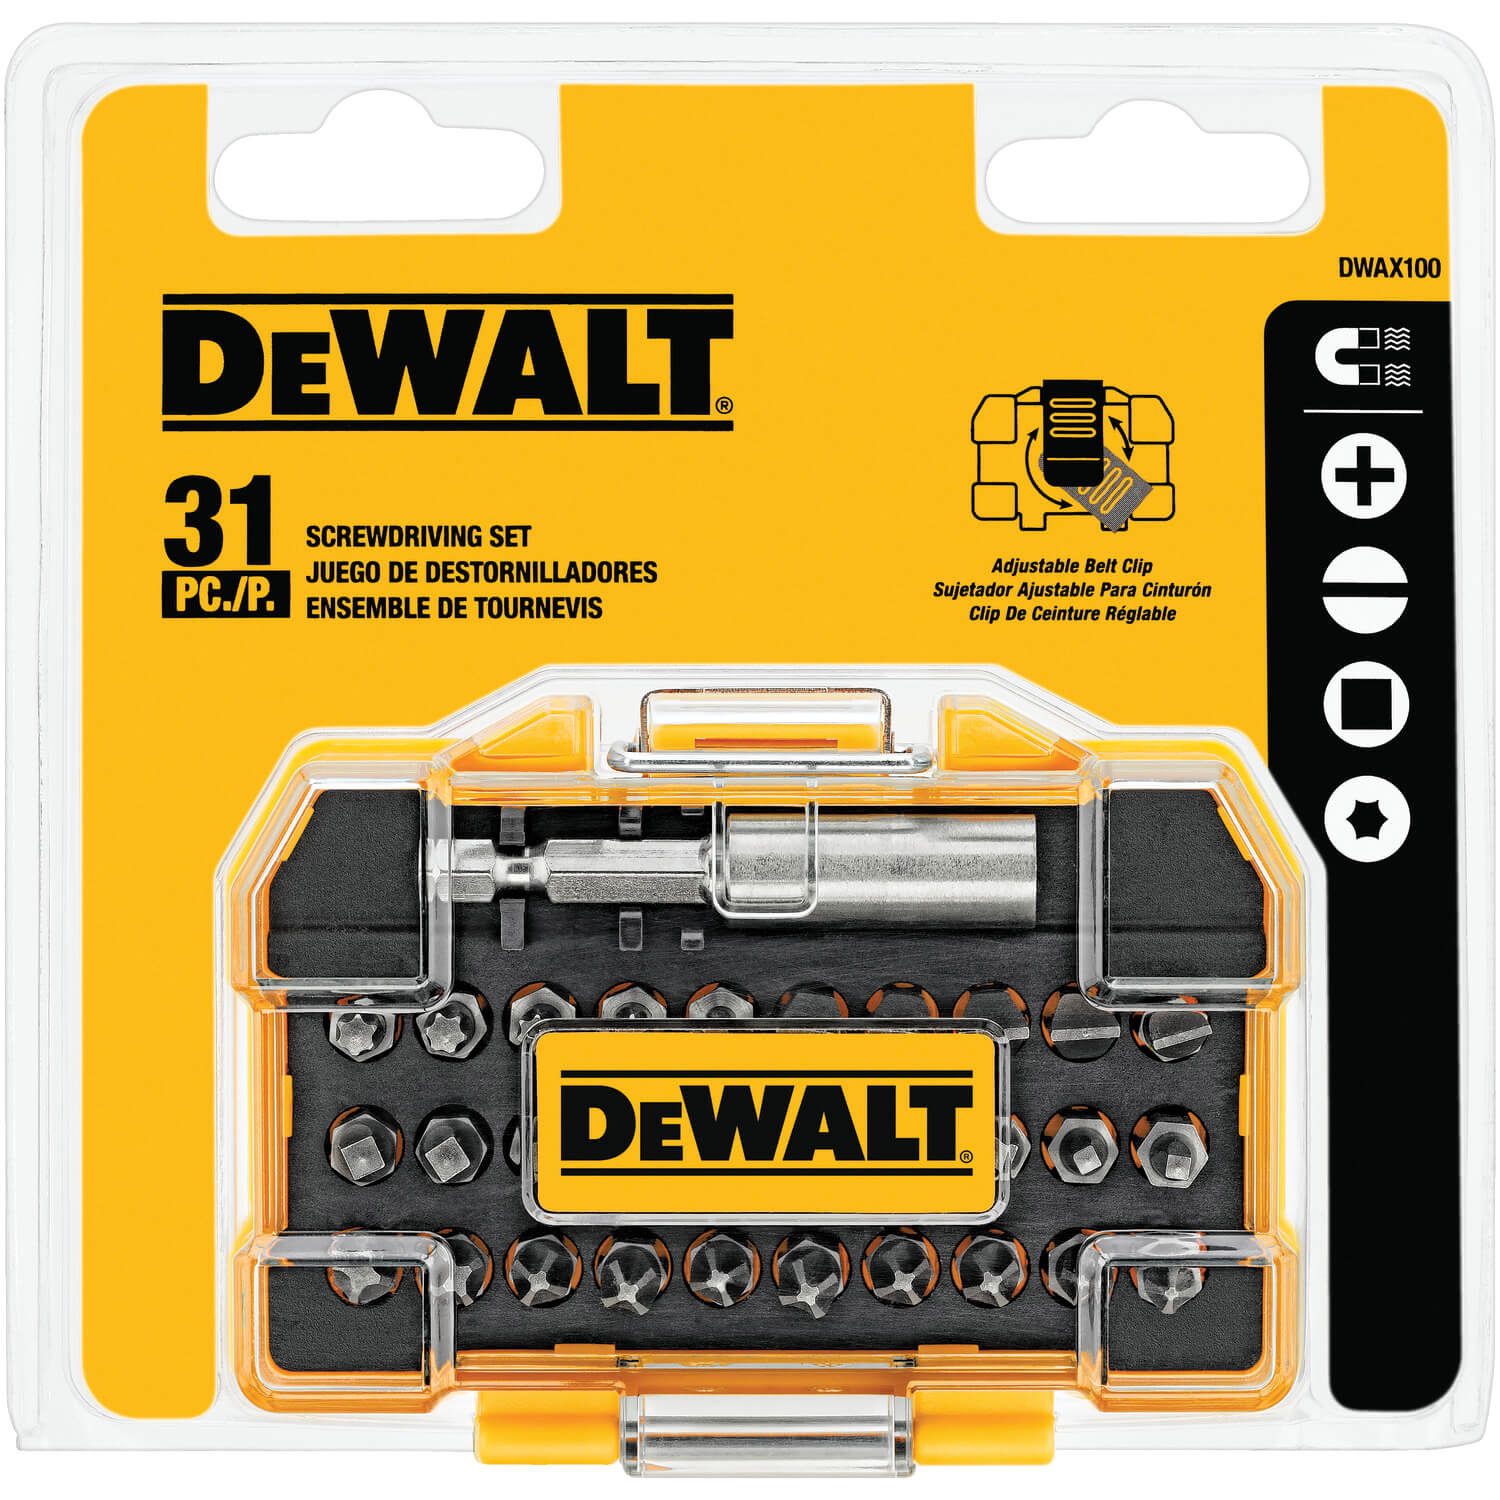 DEWALT  DWAX100  -   31PC SCREWDRIVING SET - wise-line-tools